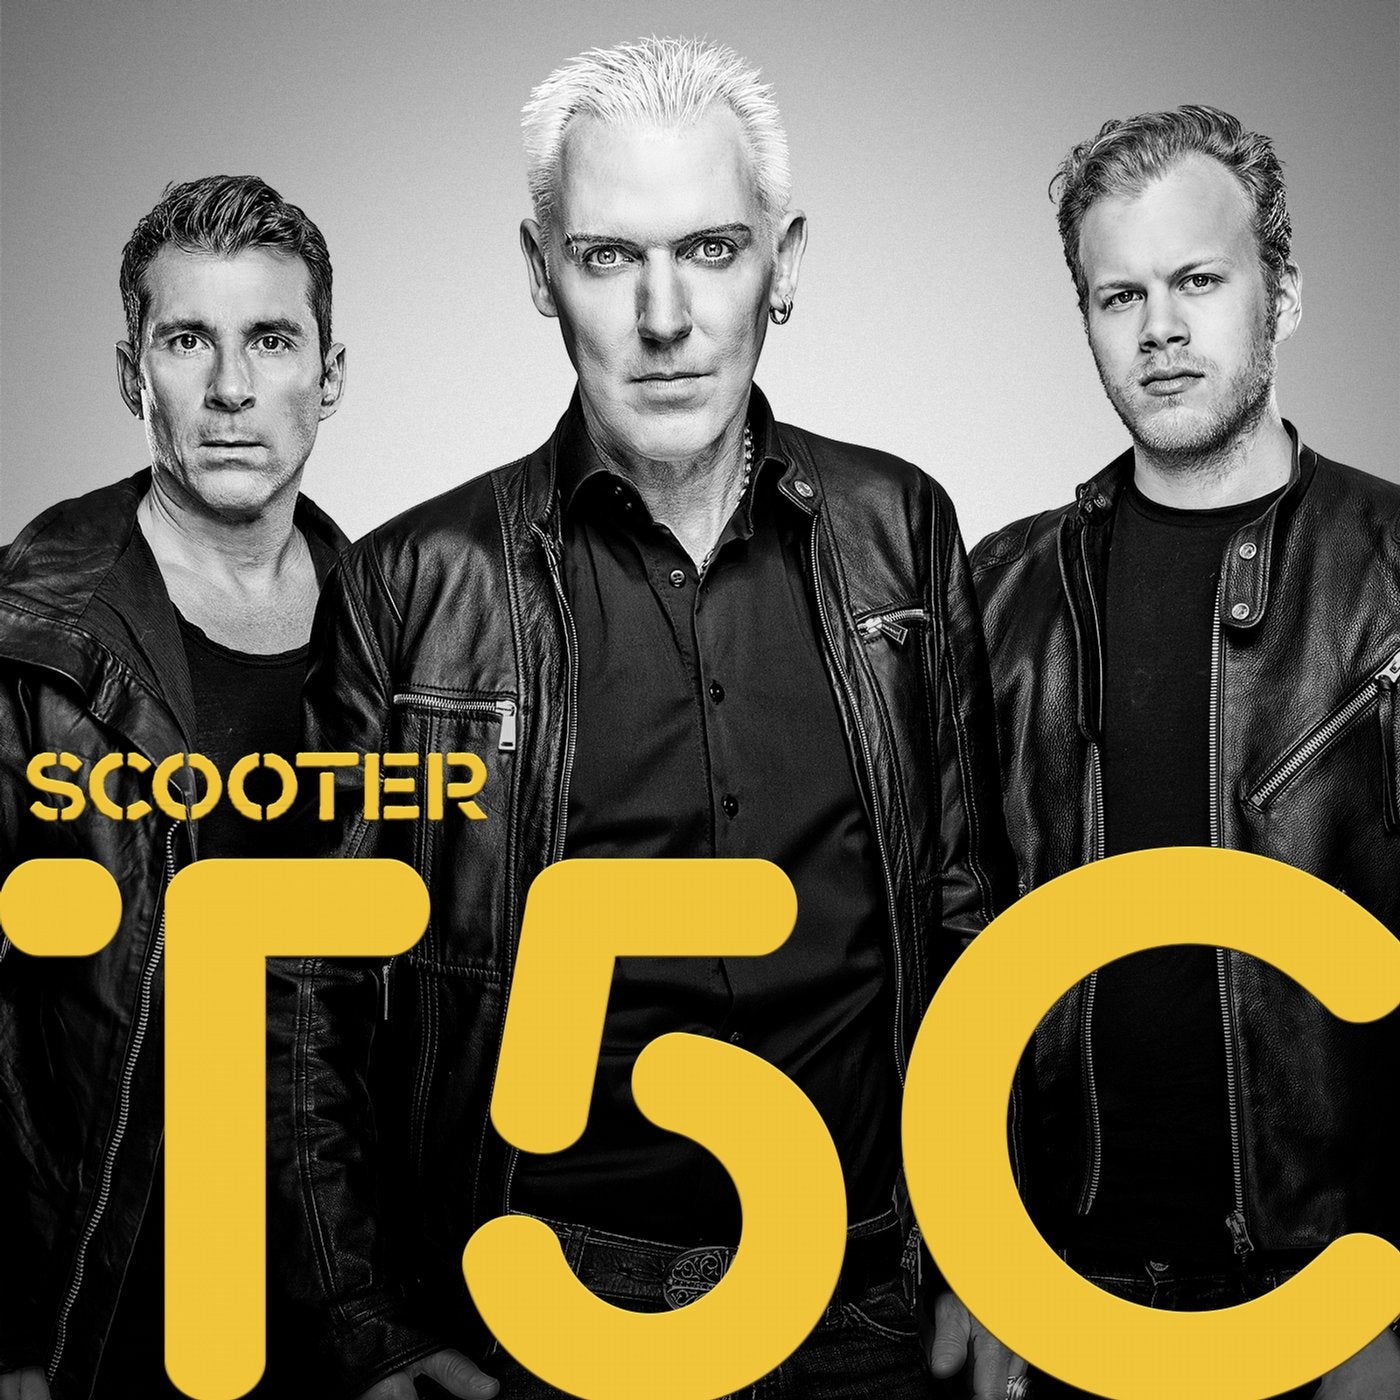 Scooter lets do it again. Scooter группа 1995. Scooter Постер. Scooter t5c. Скутер группа.